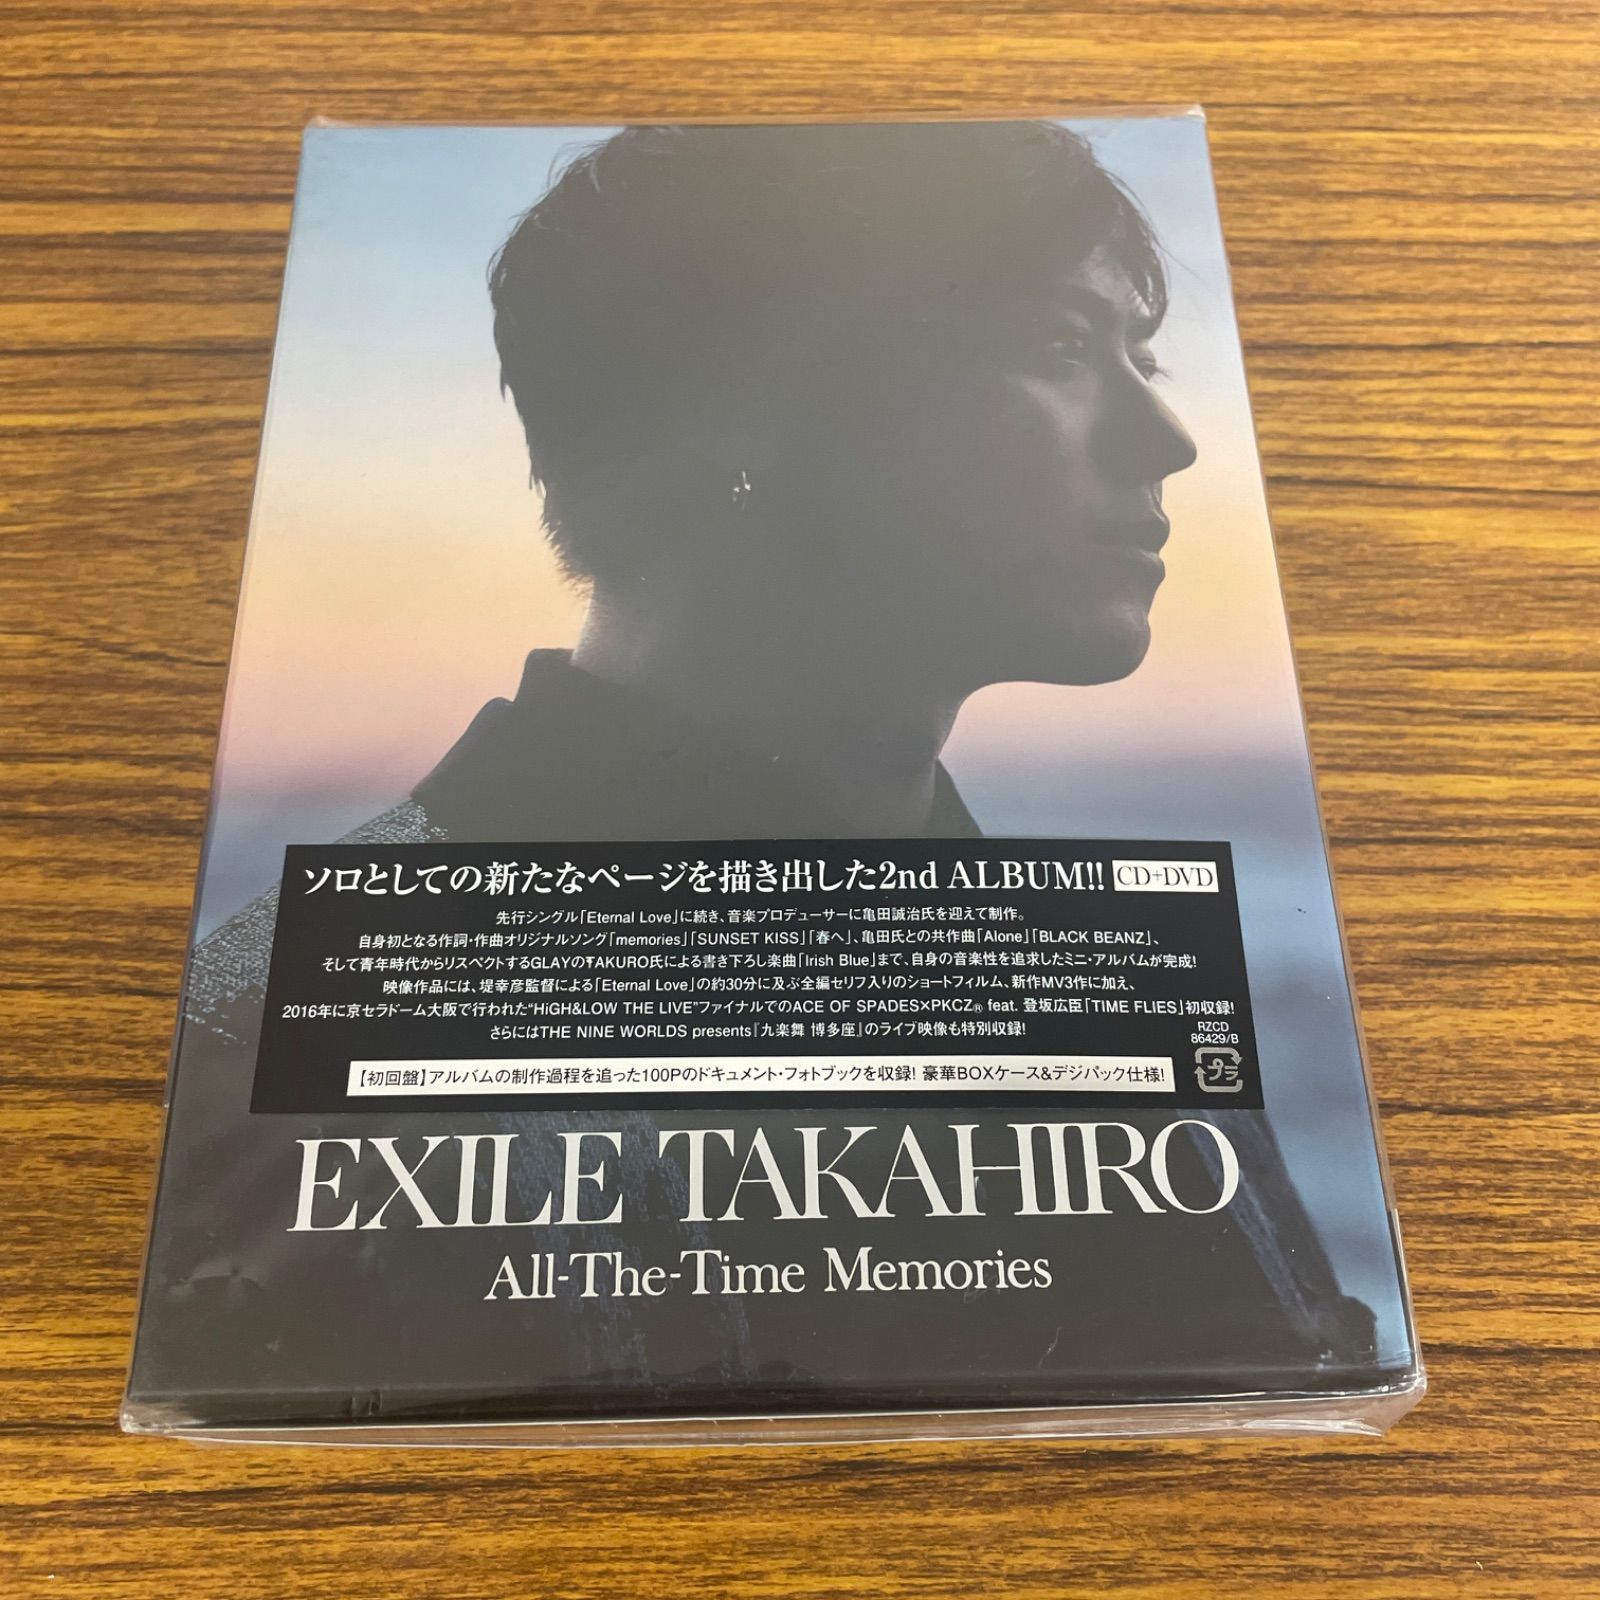 EXILE TAKAHIRO All-The-Time Memories